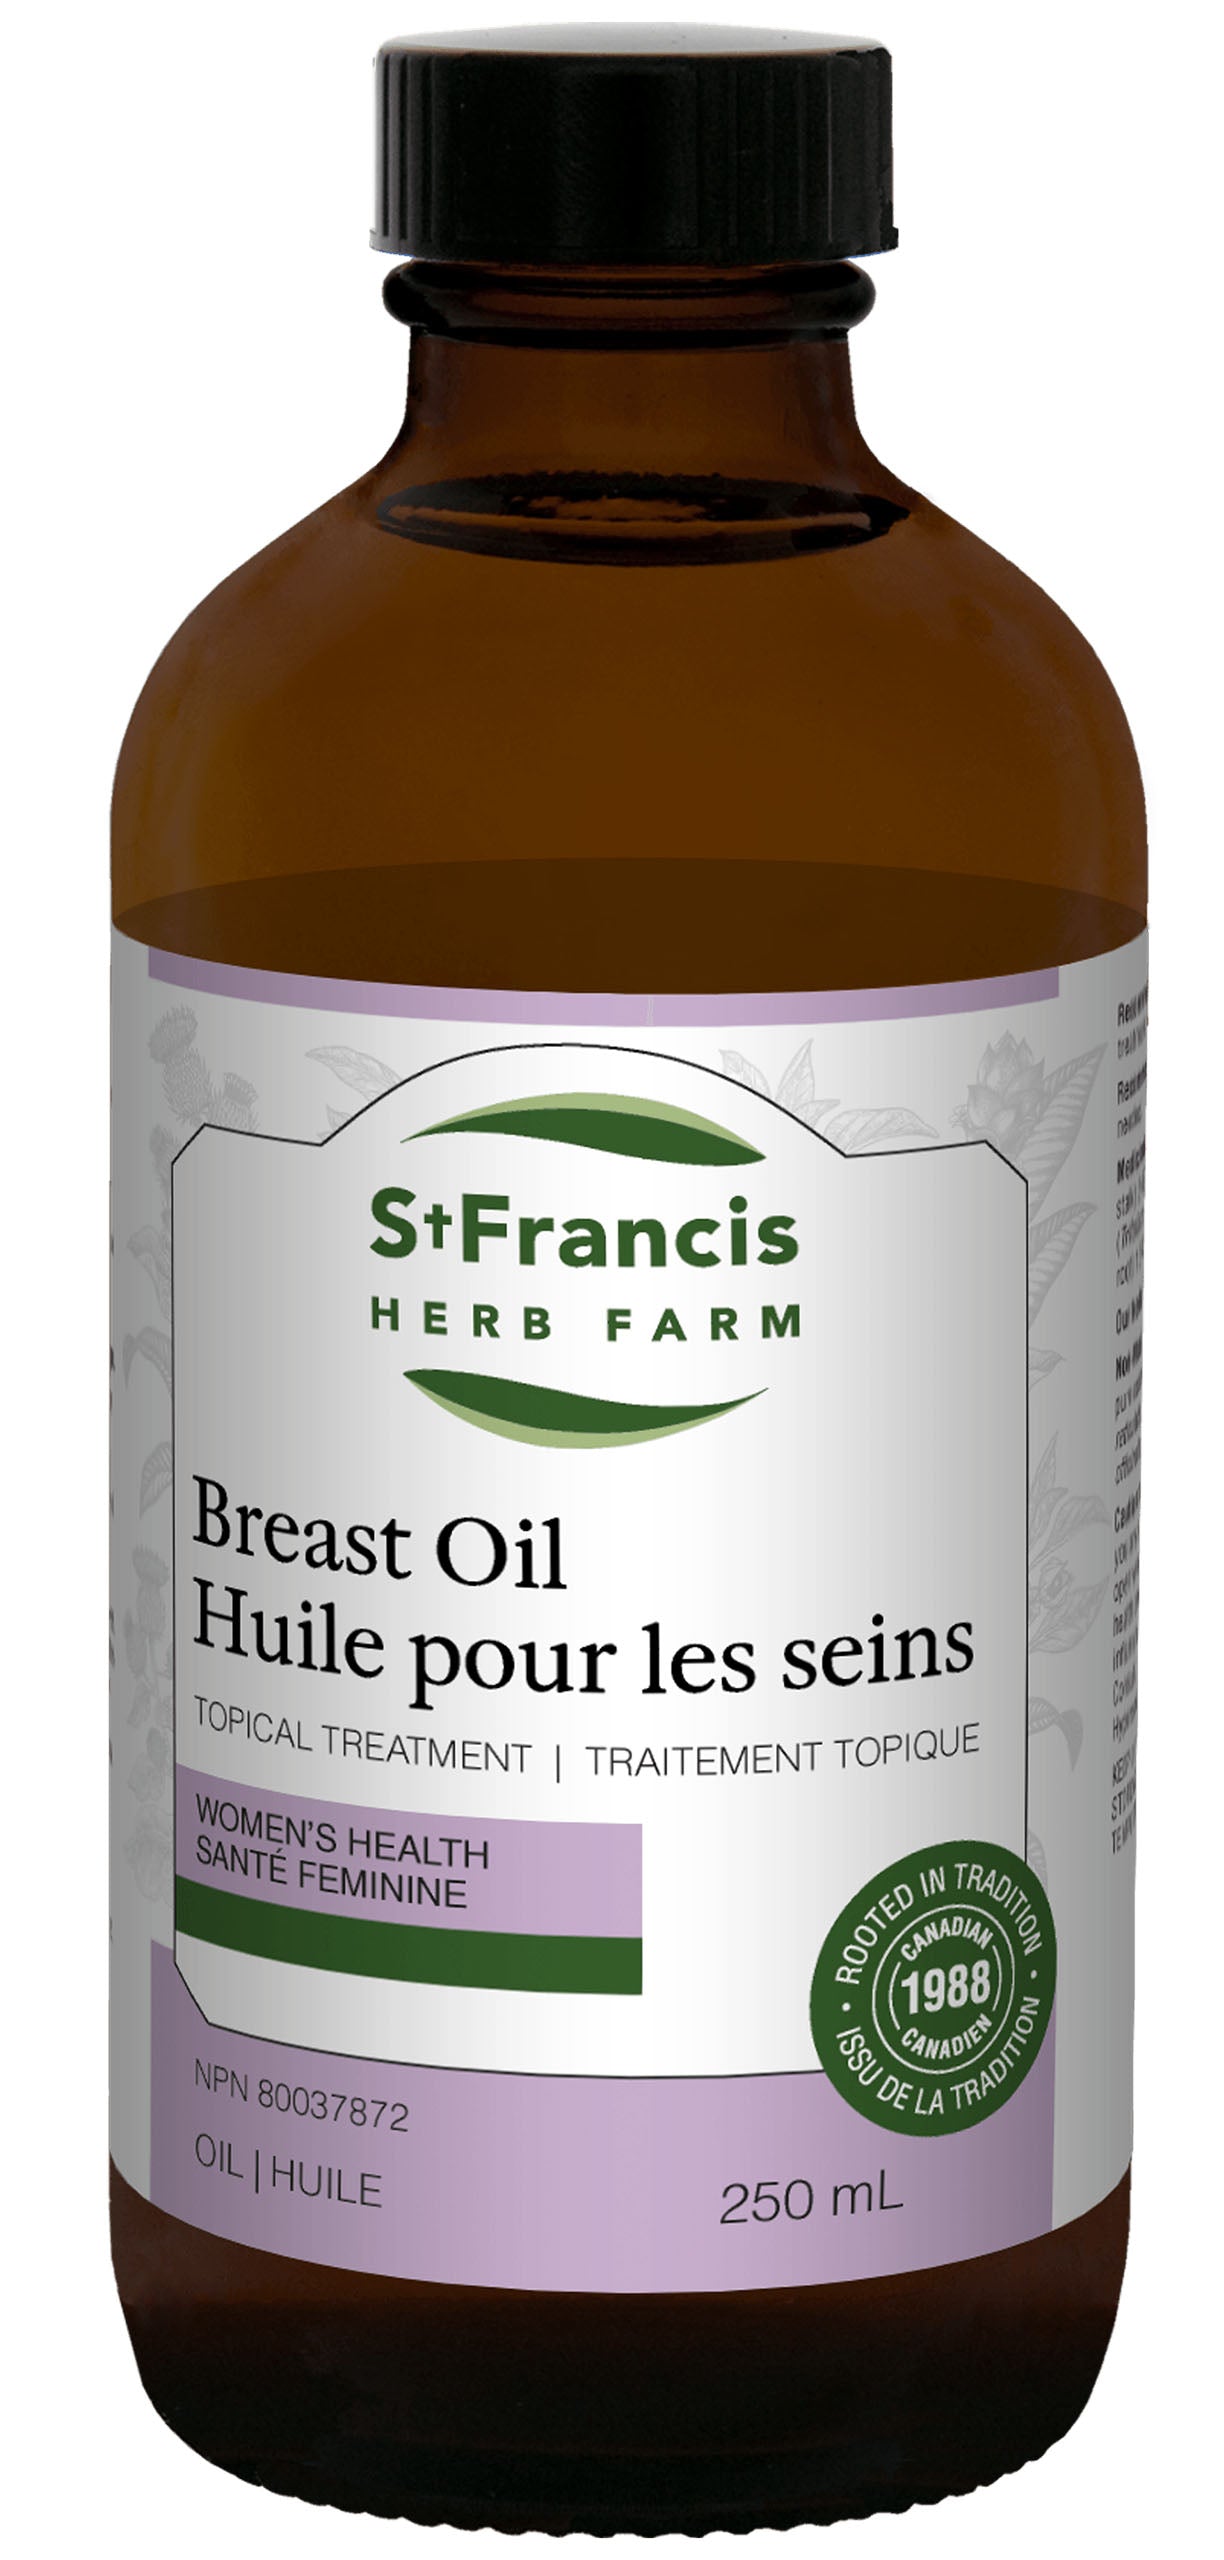 ST FRANCIS HERB FARM Breast Oil (250 ml)